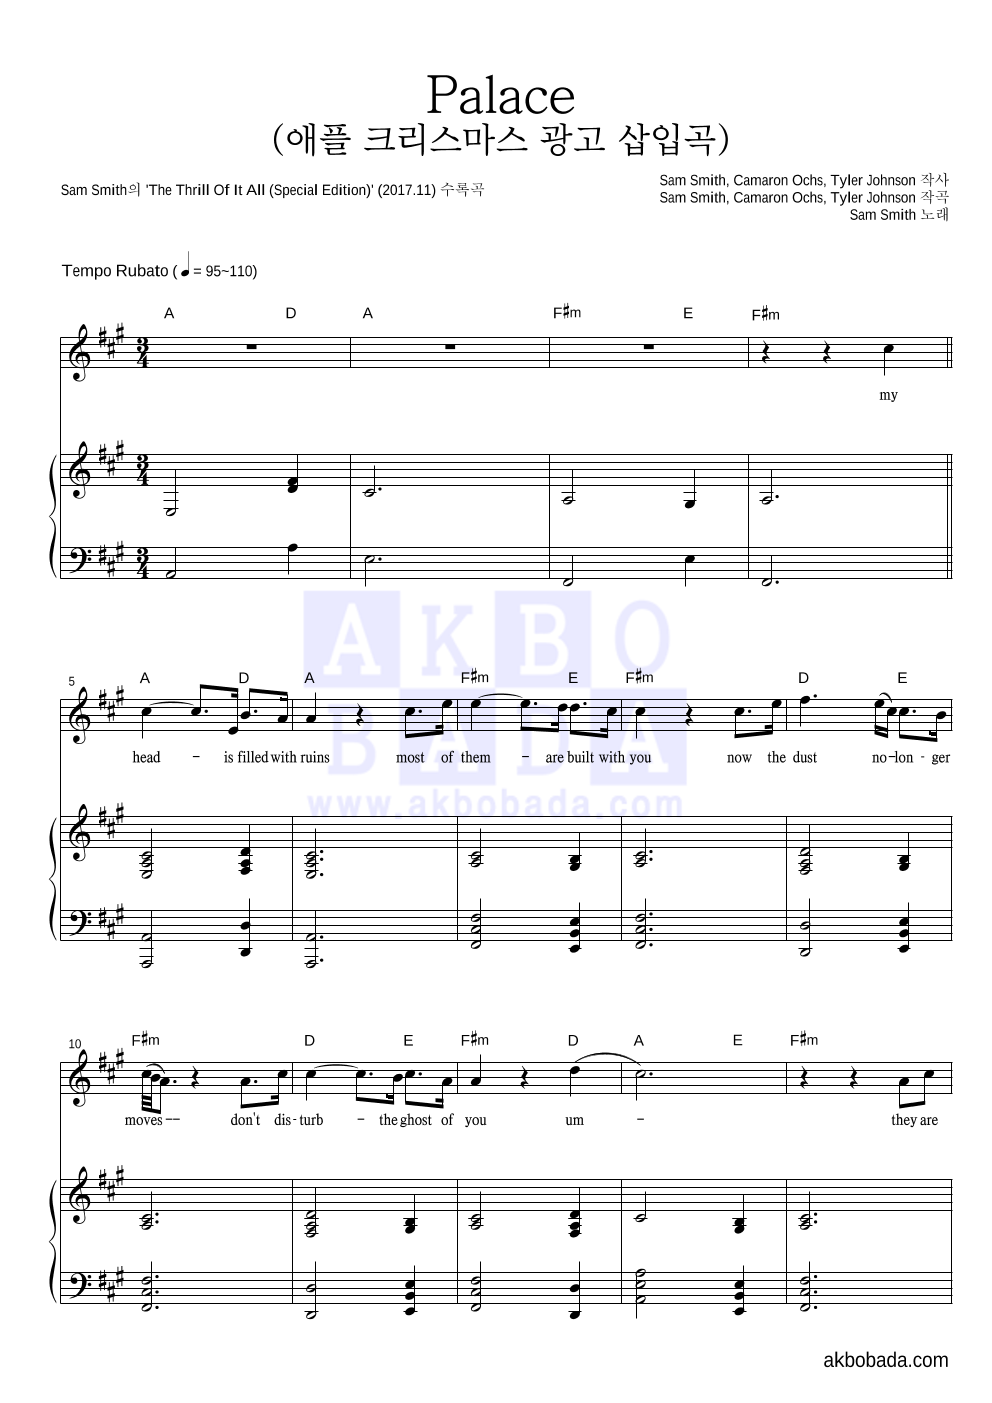 Sam Smith - Palace (애플 크리스마스 광고 삽입곡) 피아노 3단 악보 